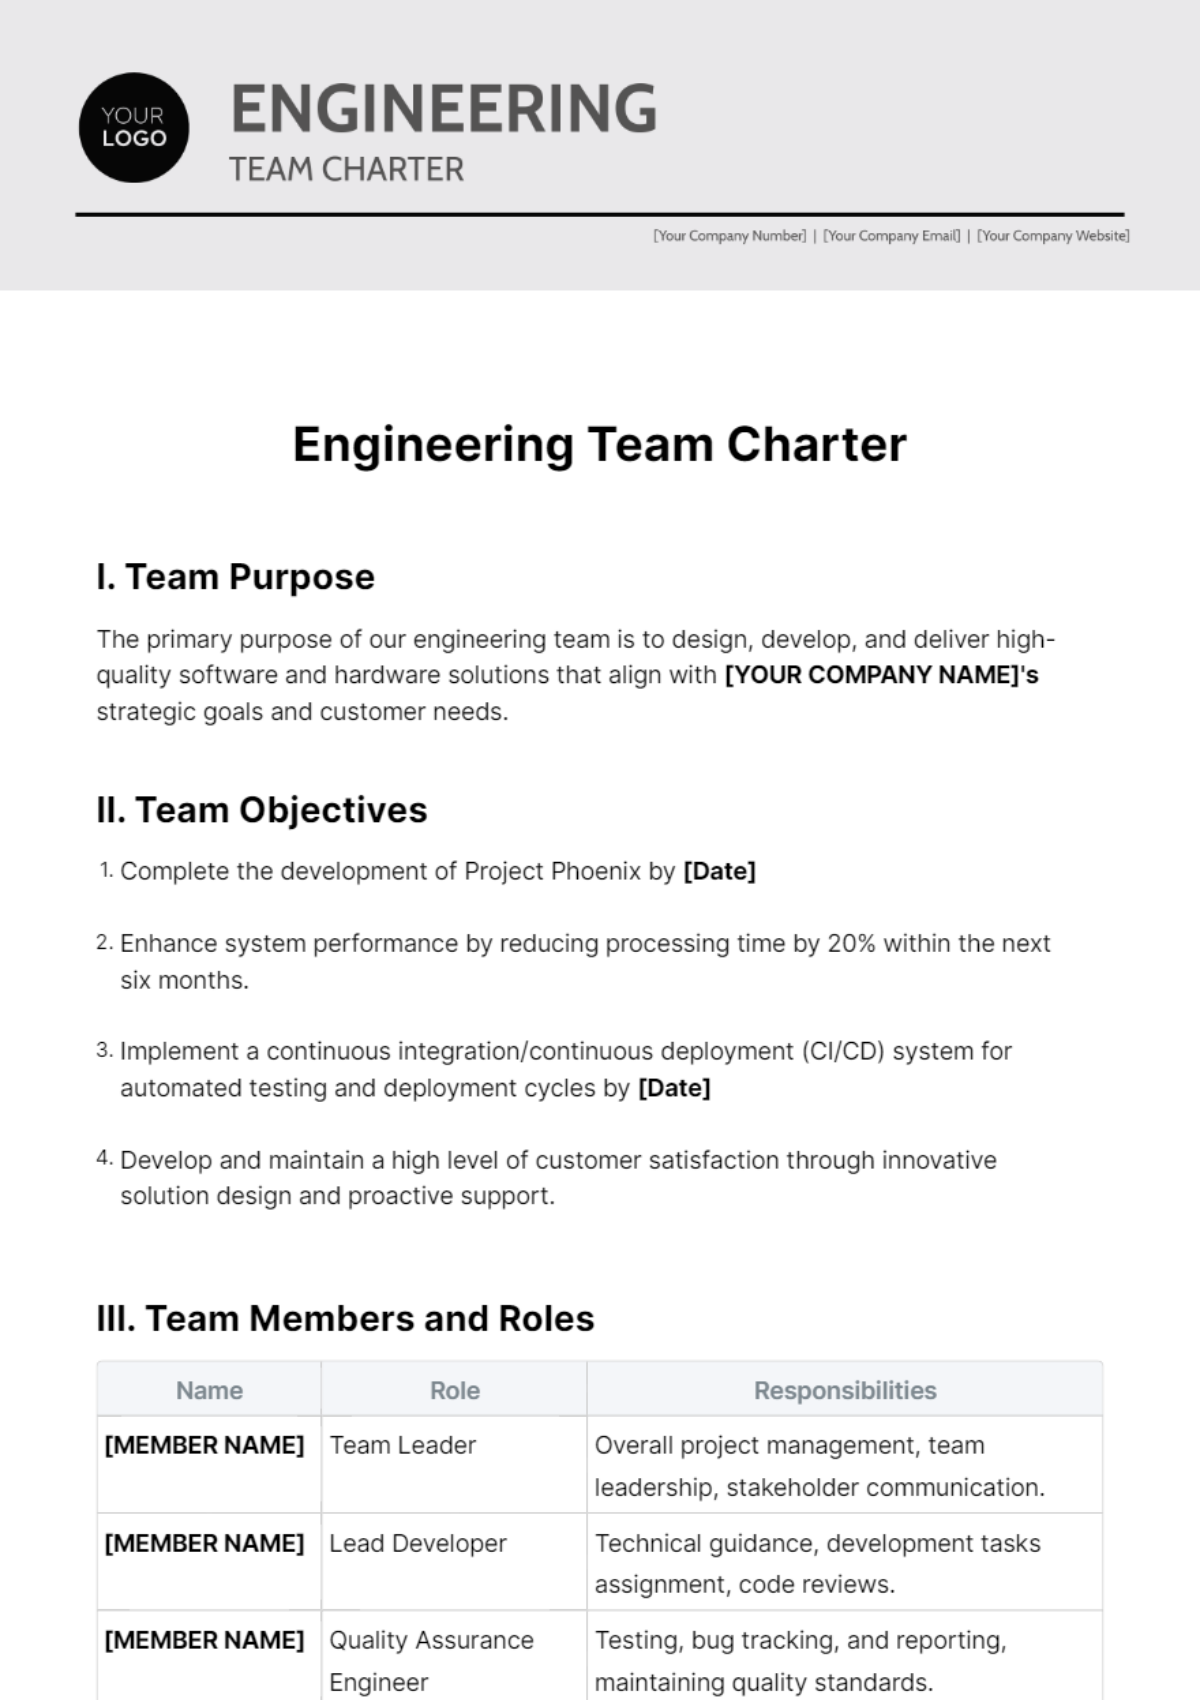 Engineering Team Charter Template